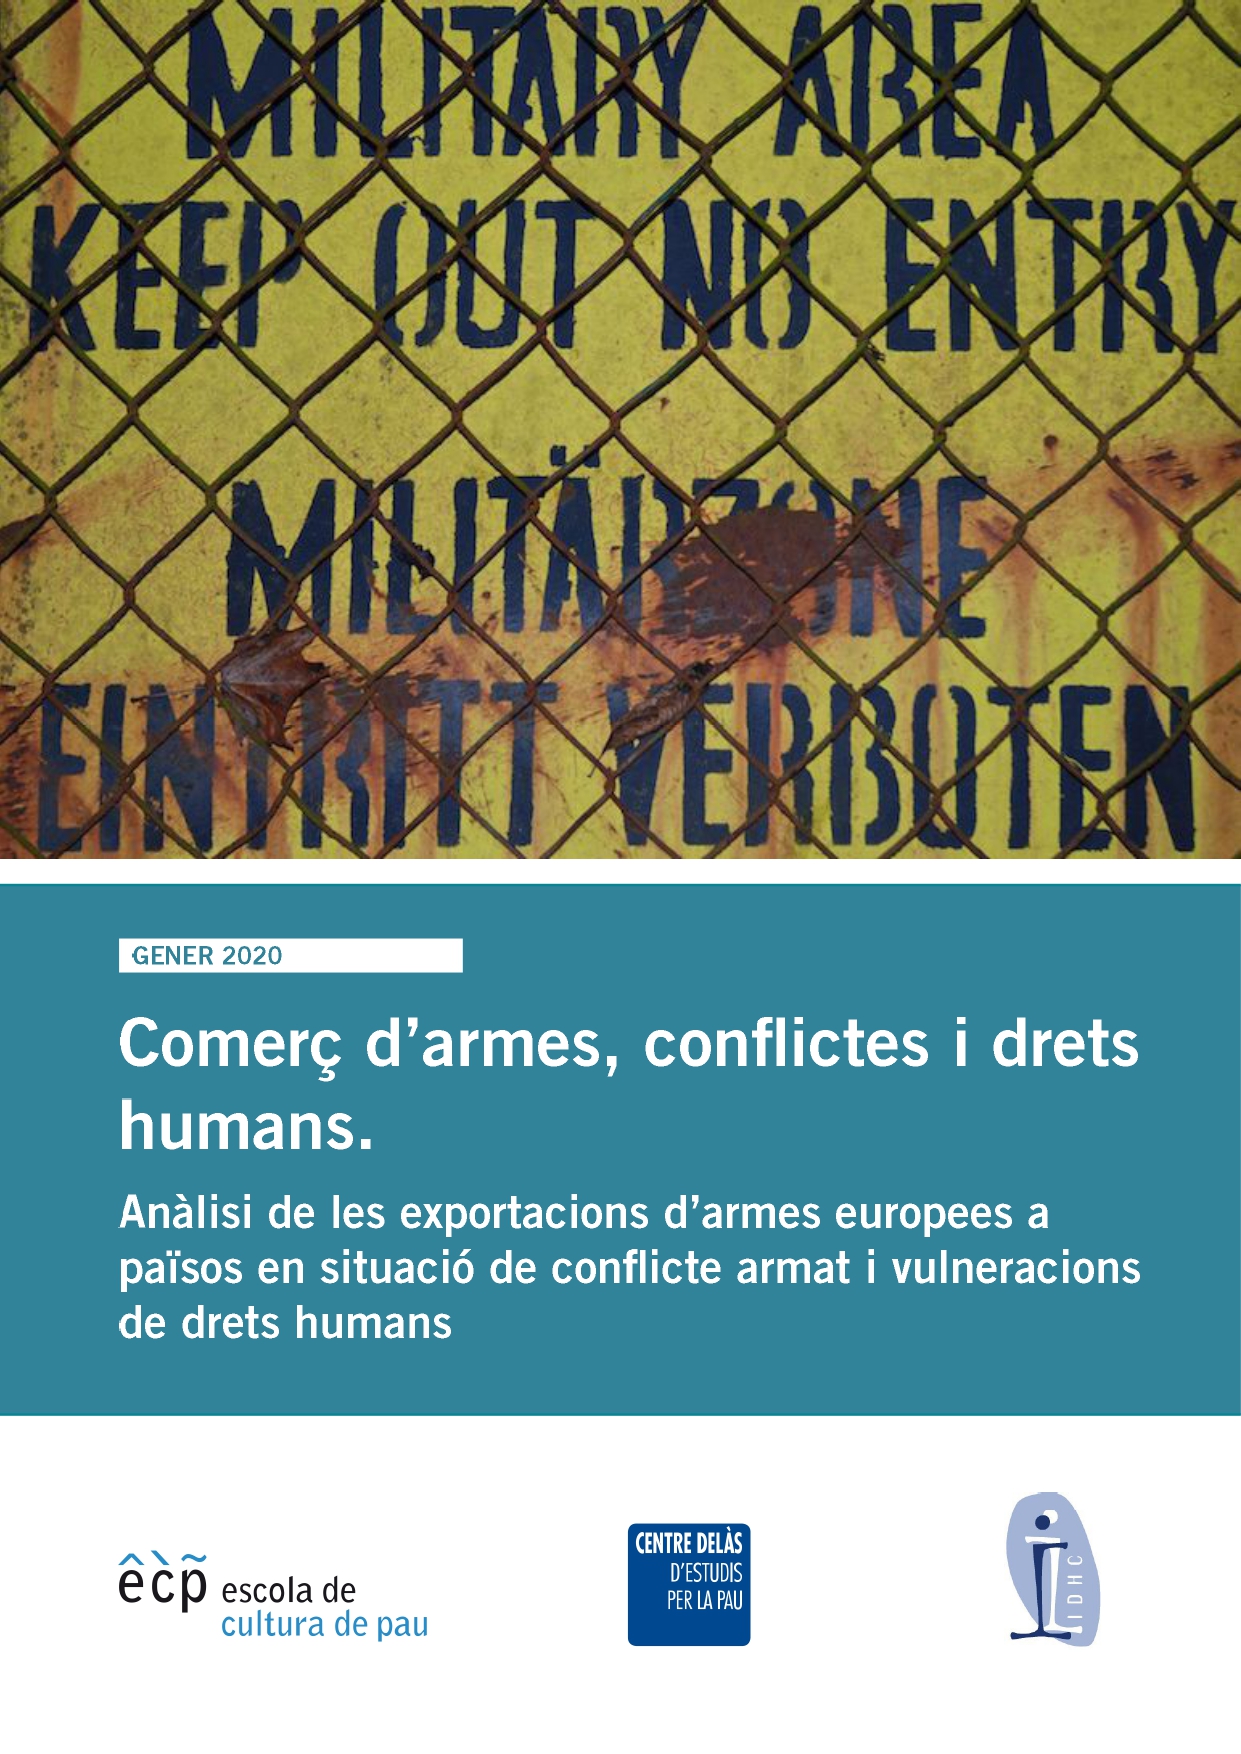 portada Informe ComerçArmes Conflictes DDHH CentreDelas ECP IDHC web CAT